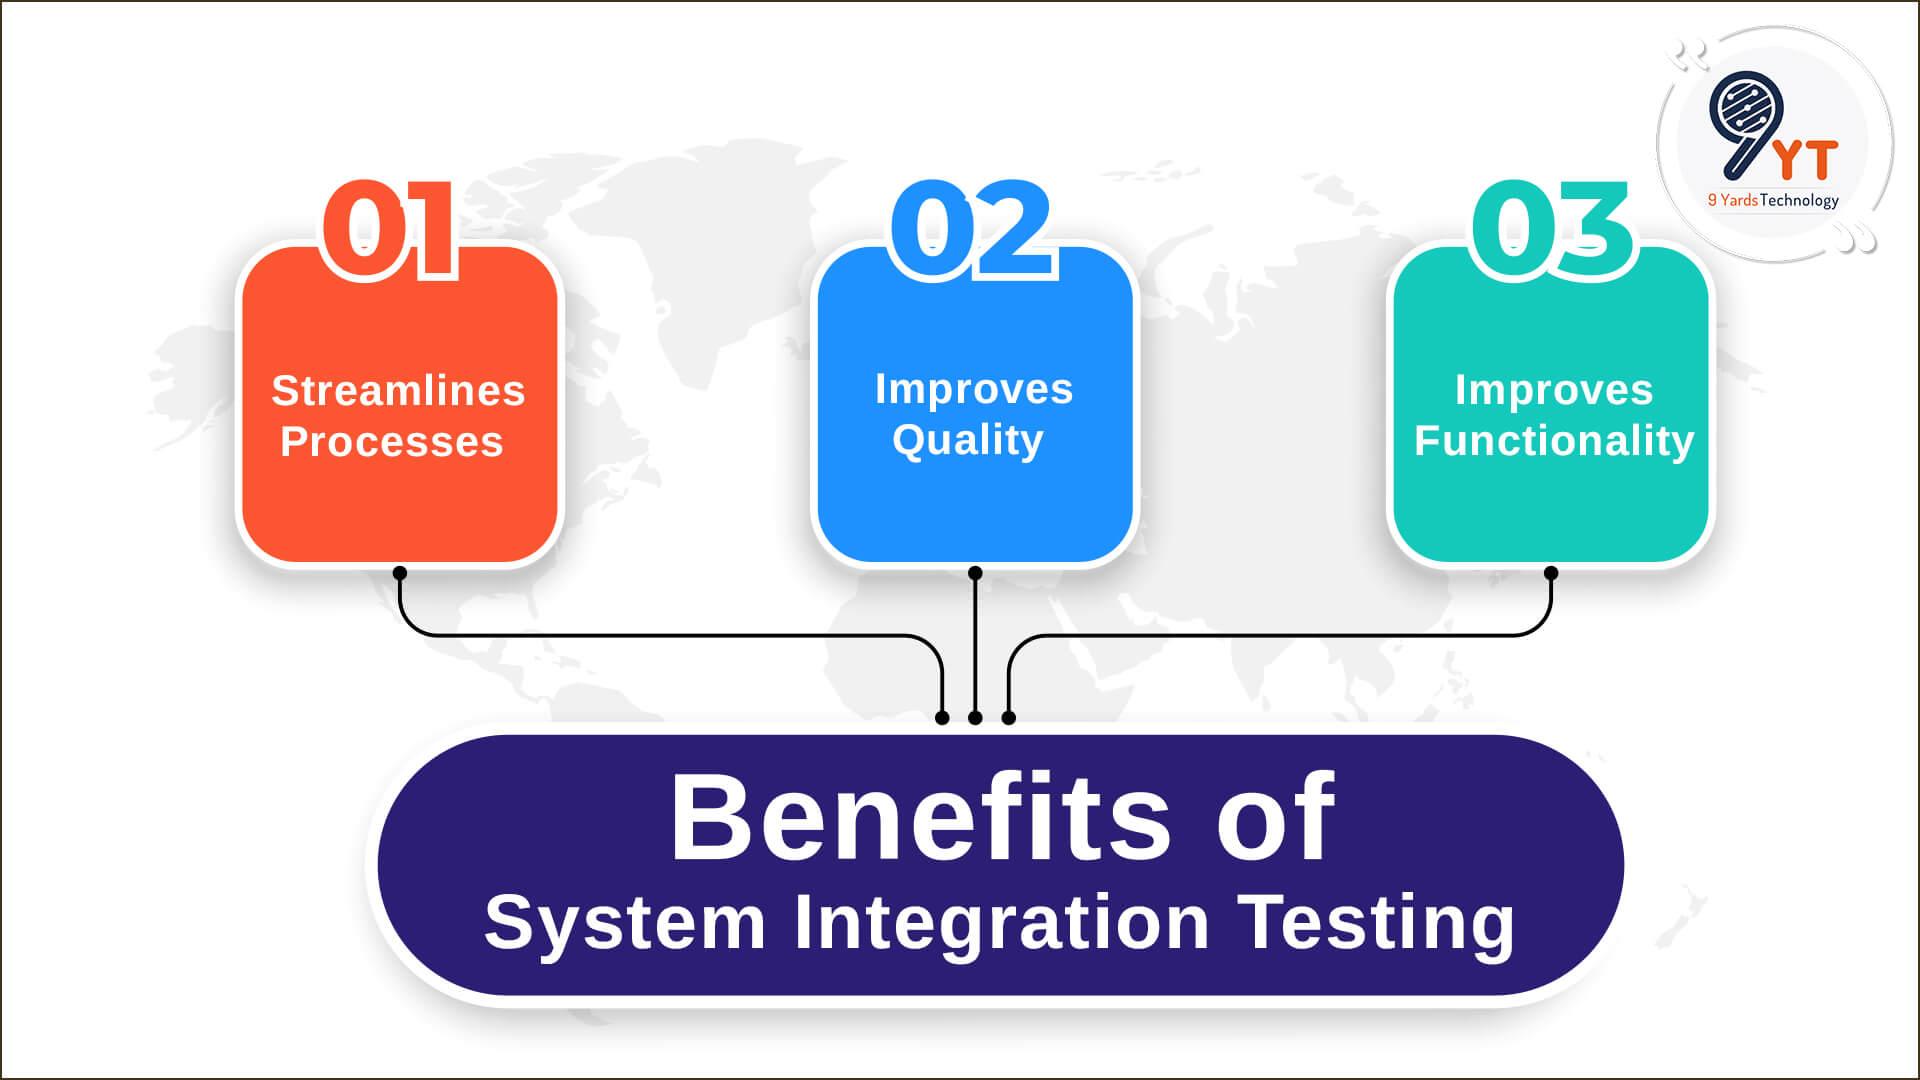 Benefits of System Integration Testing